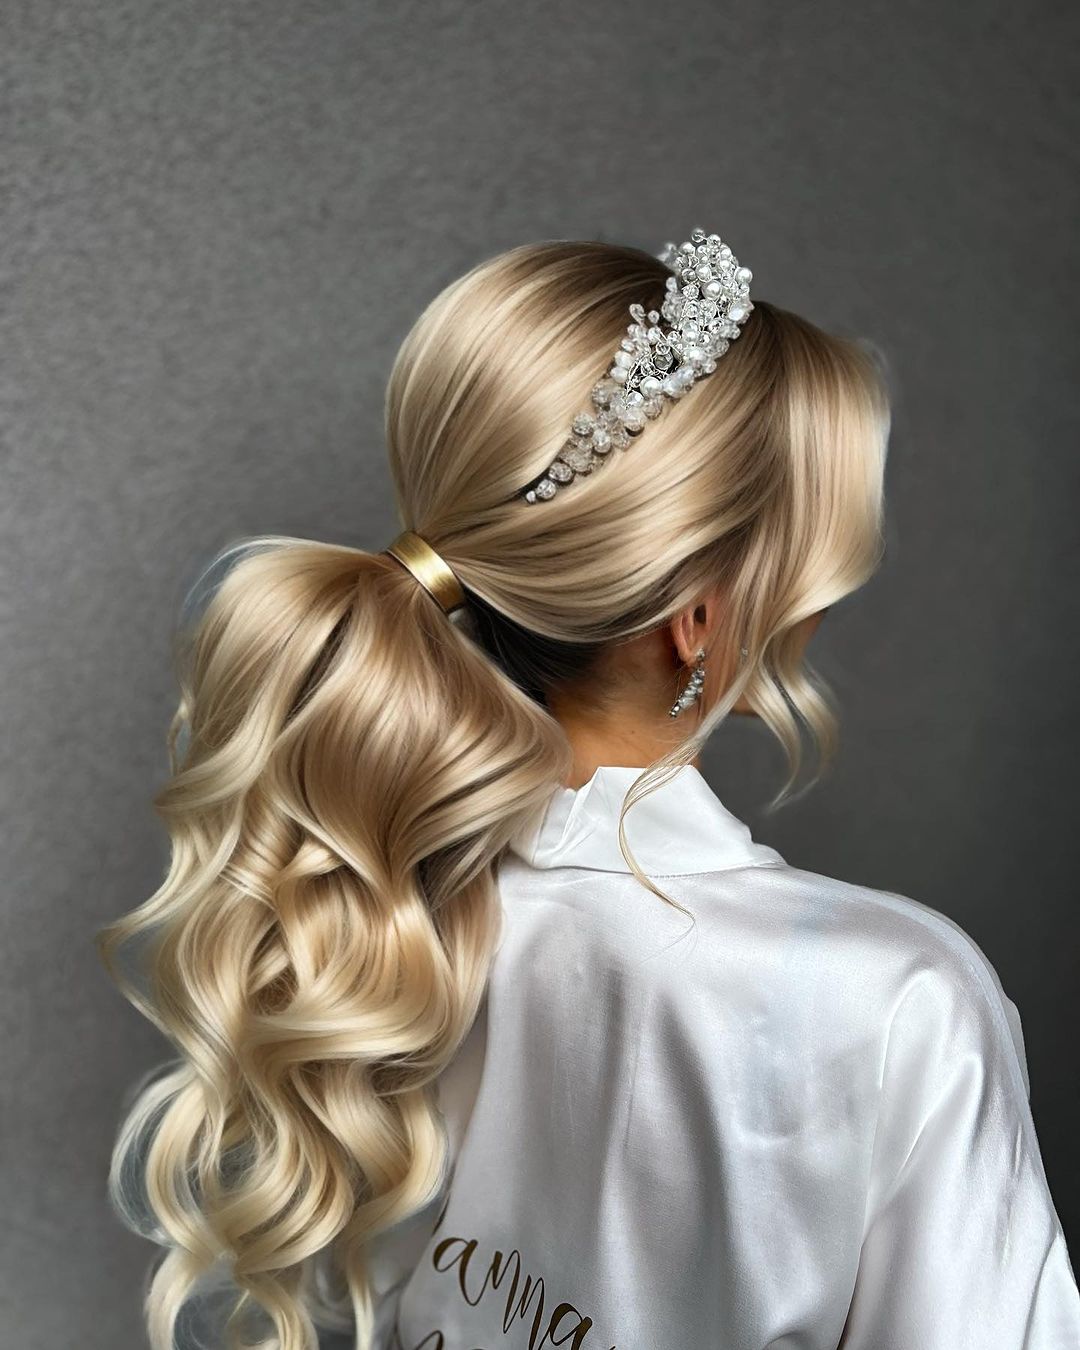 low ponytail and a tiara